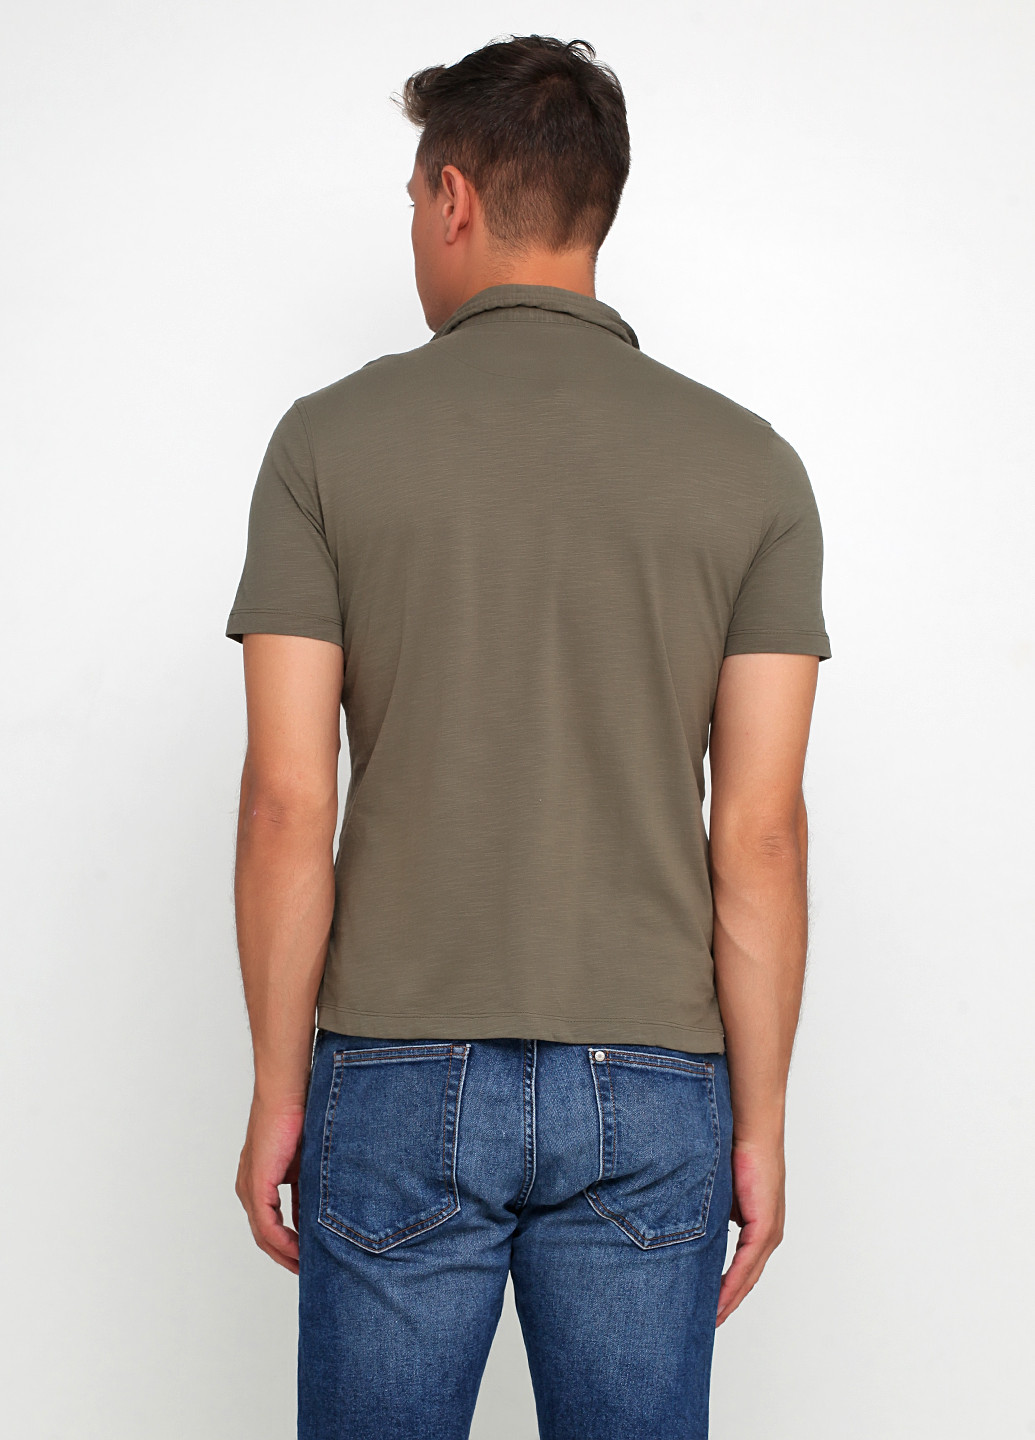 Оливковая (хаки) футболка-поло для мужчин Gas однотонная